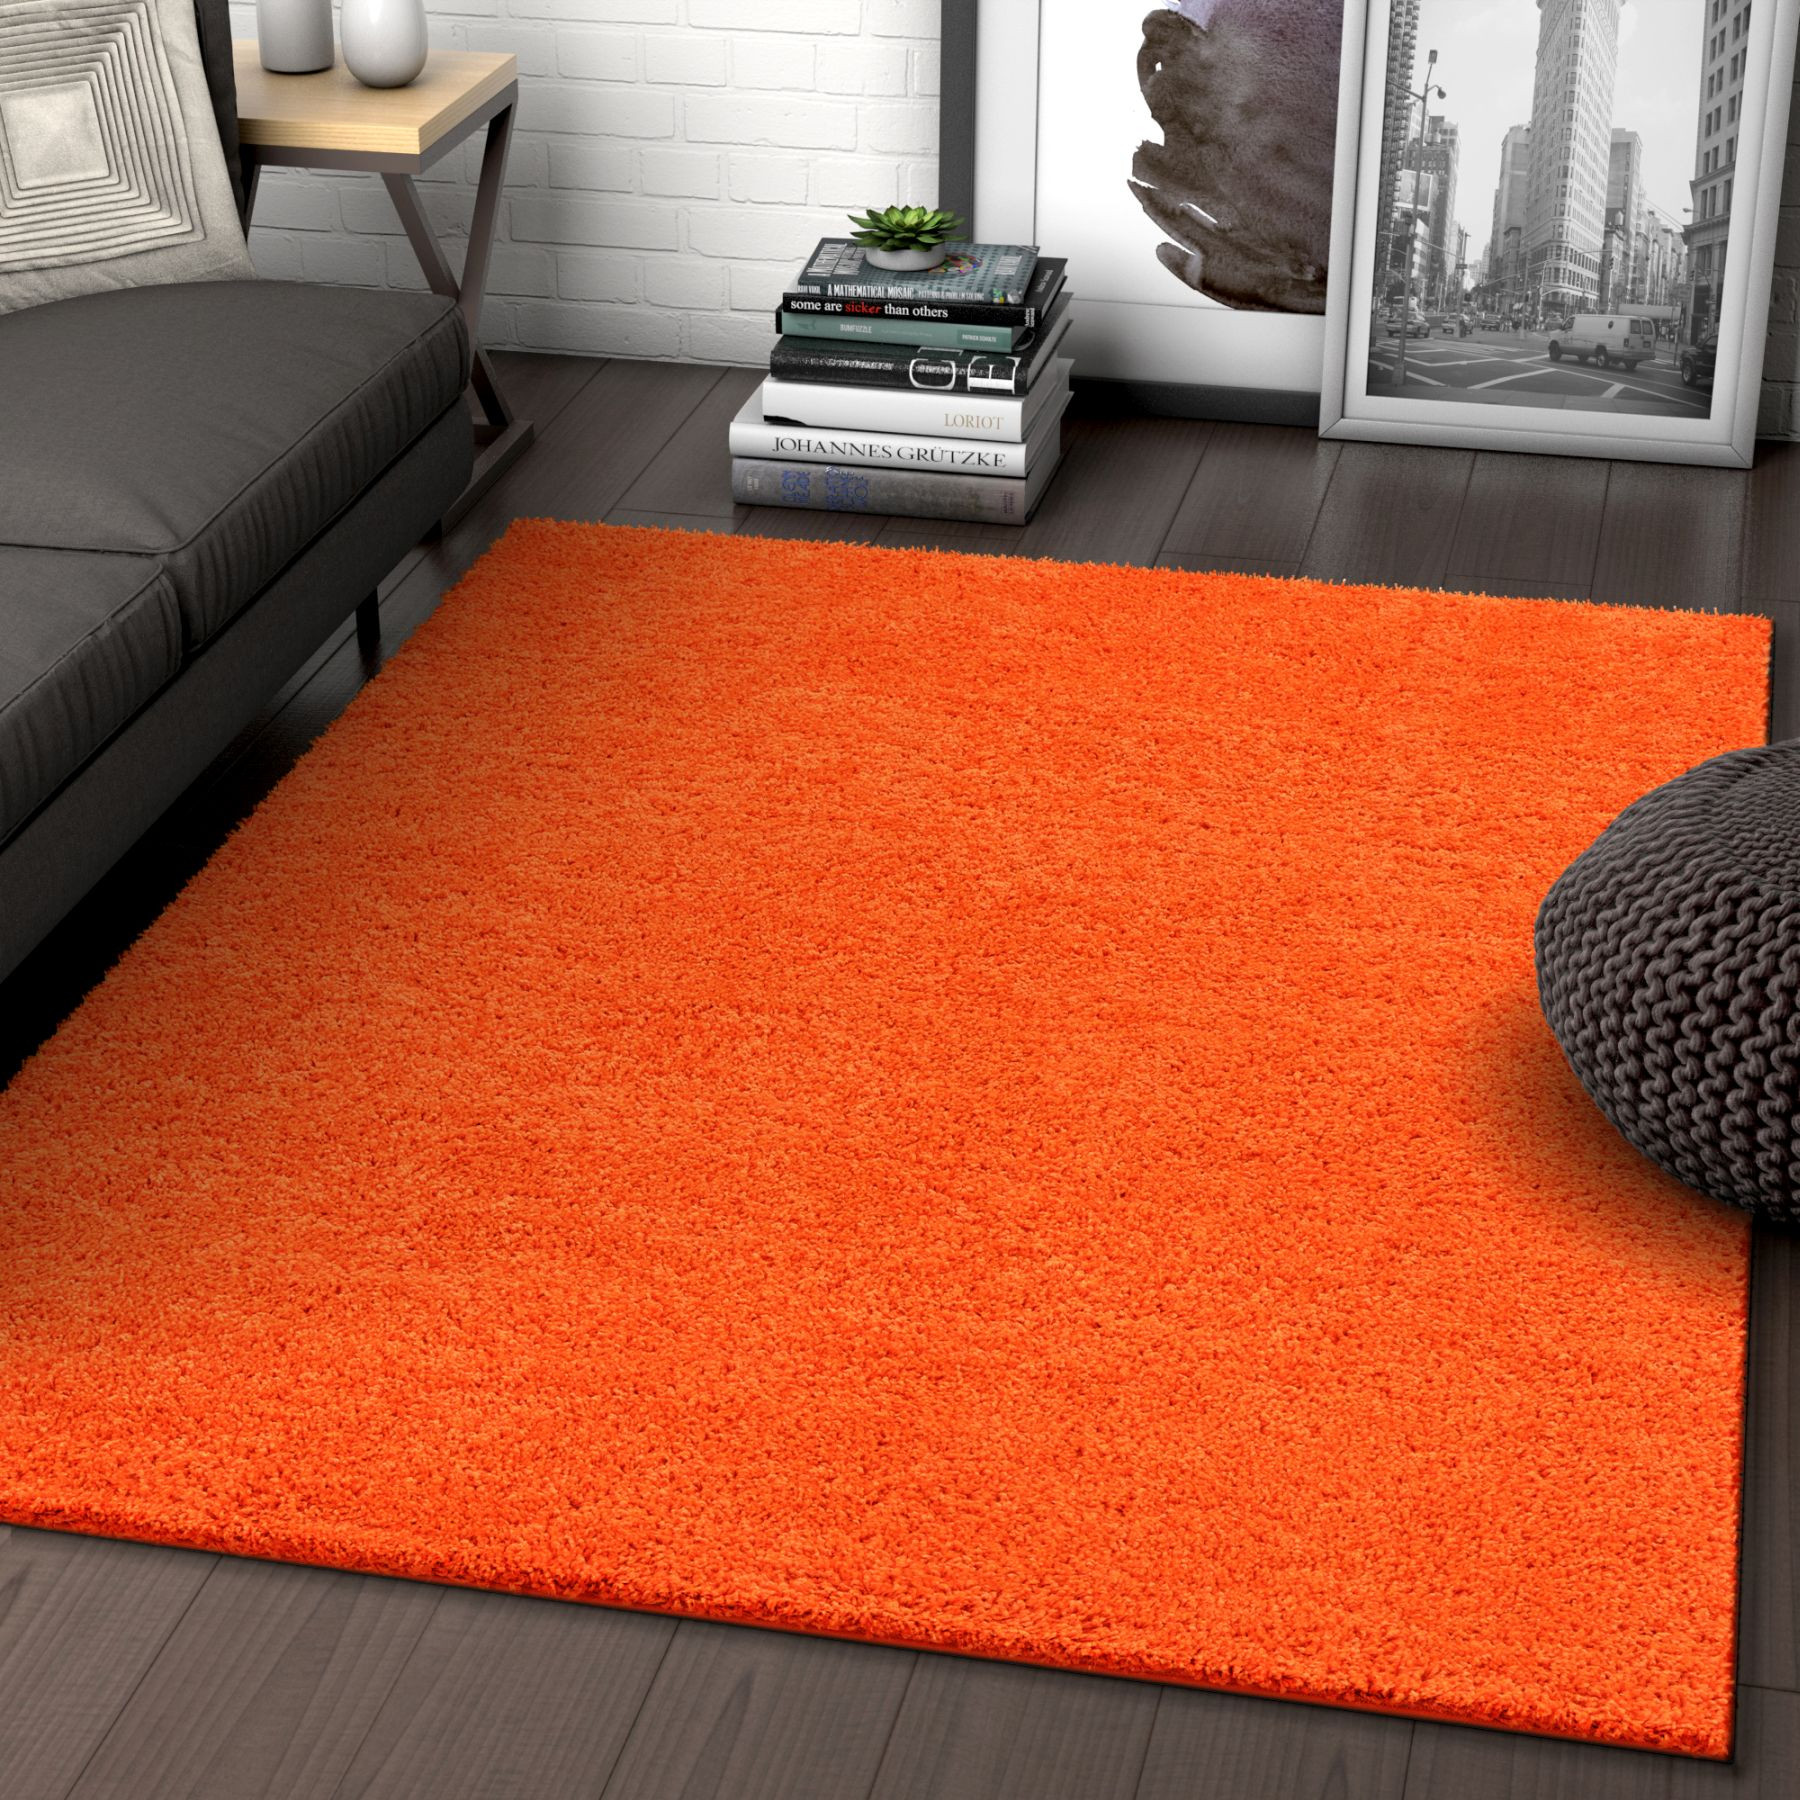 Orange Rugs for Living Room Awesome solid Retro Modern orange Shag 5x7 5 X 7 2 area Rug